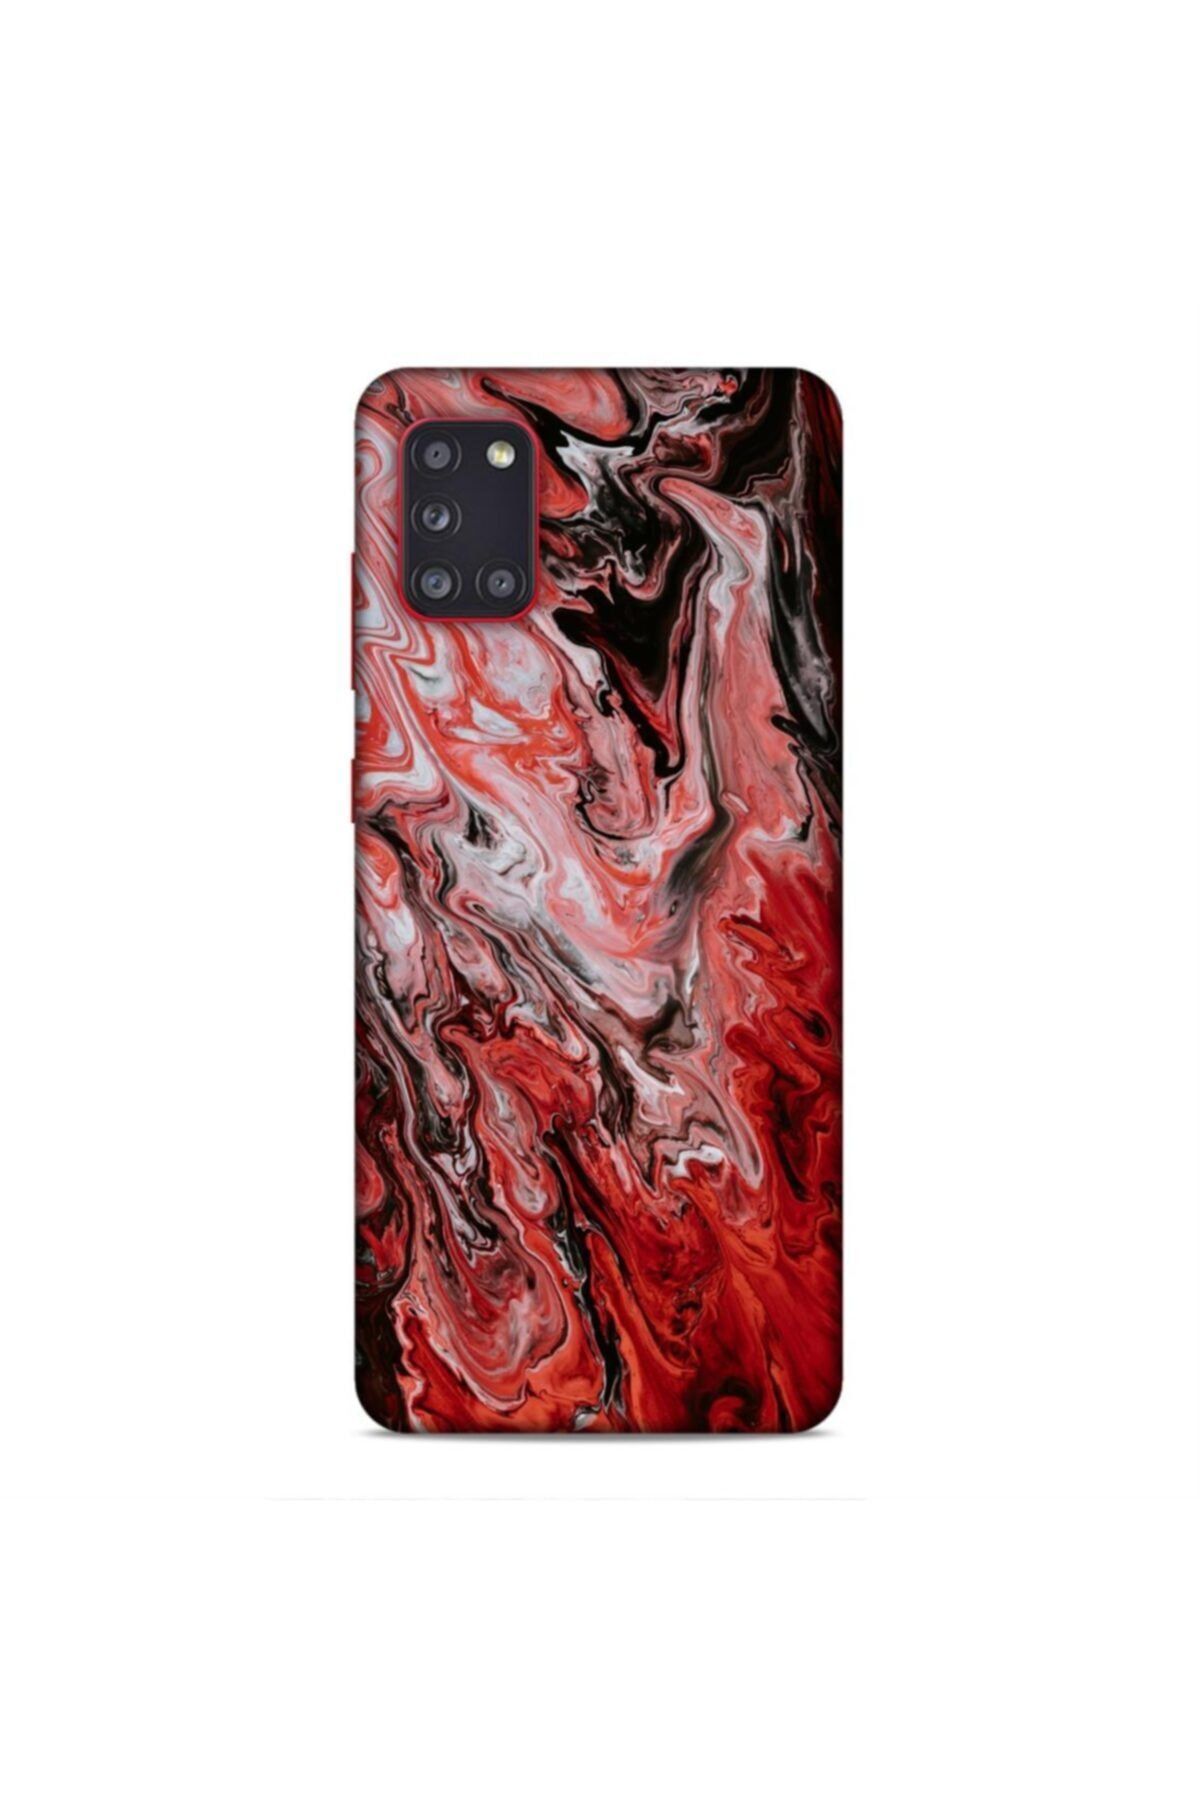 Pickcase Samsung Galaxy A31 Kılıf Desenli Arka Kapak Kızıl Tablo